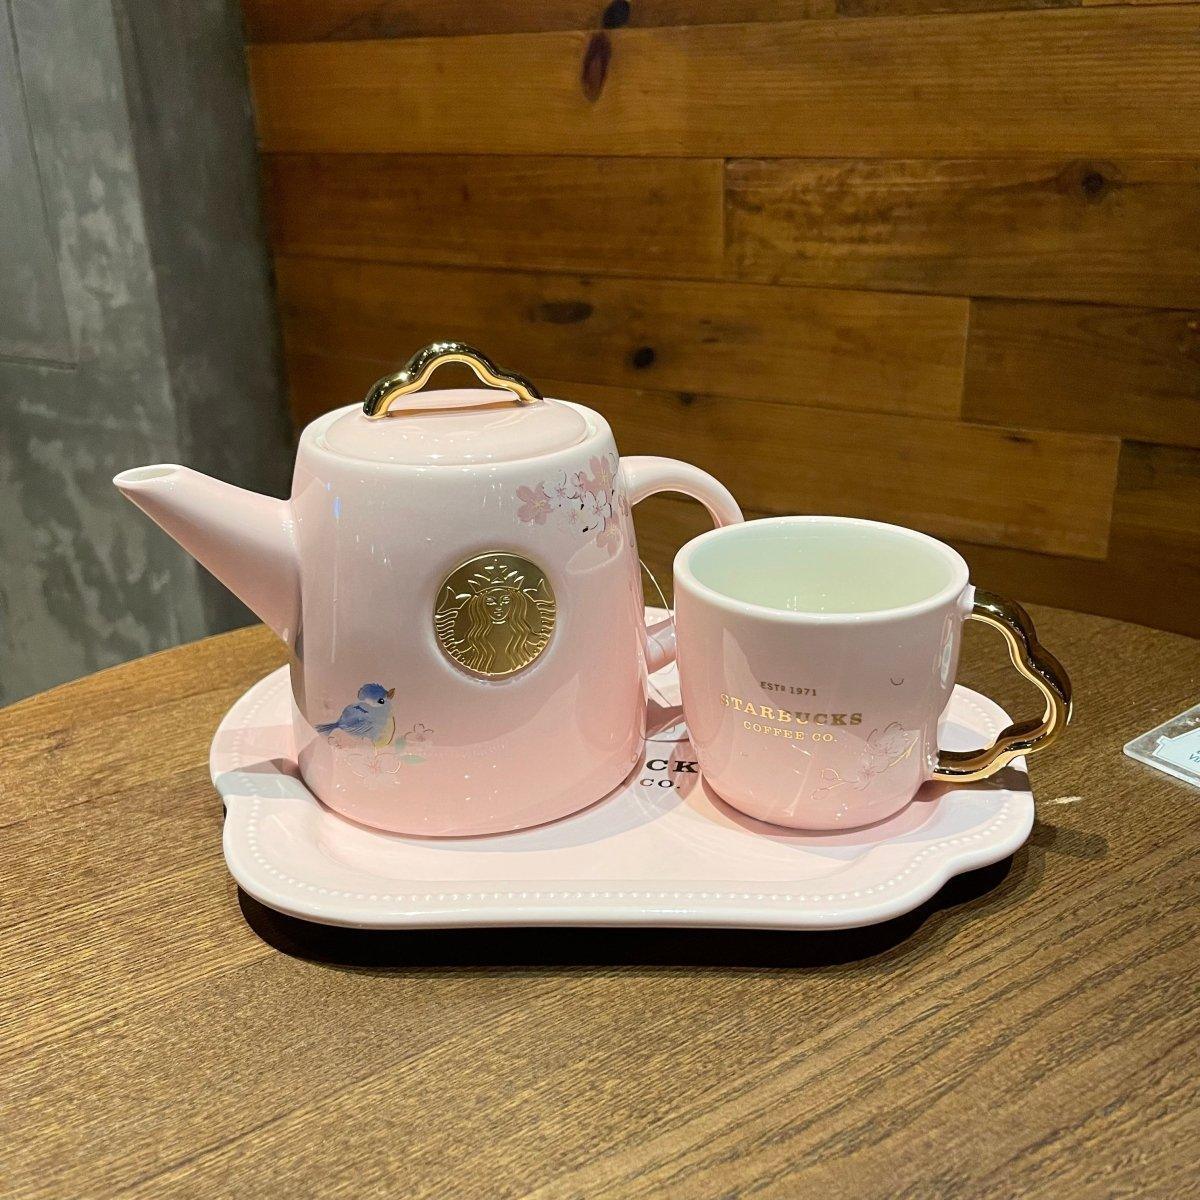 Starbucks Sakura Ceramic Kettle Tea Pot and Cup Set - Ann Ann Starbucks